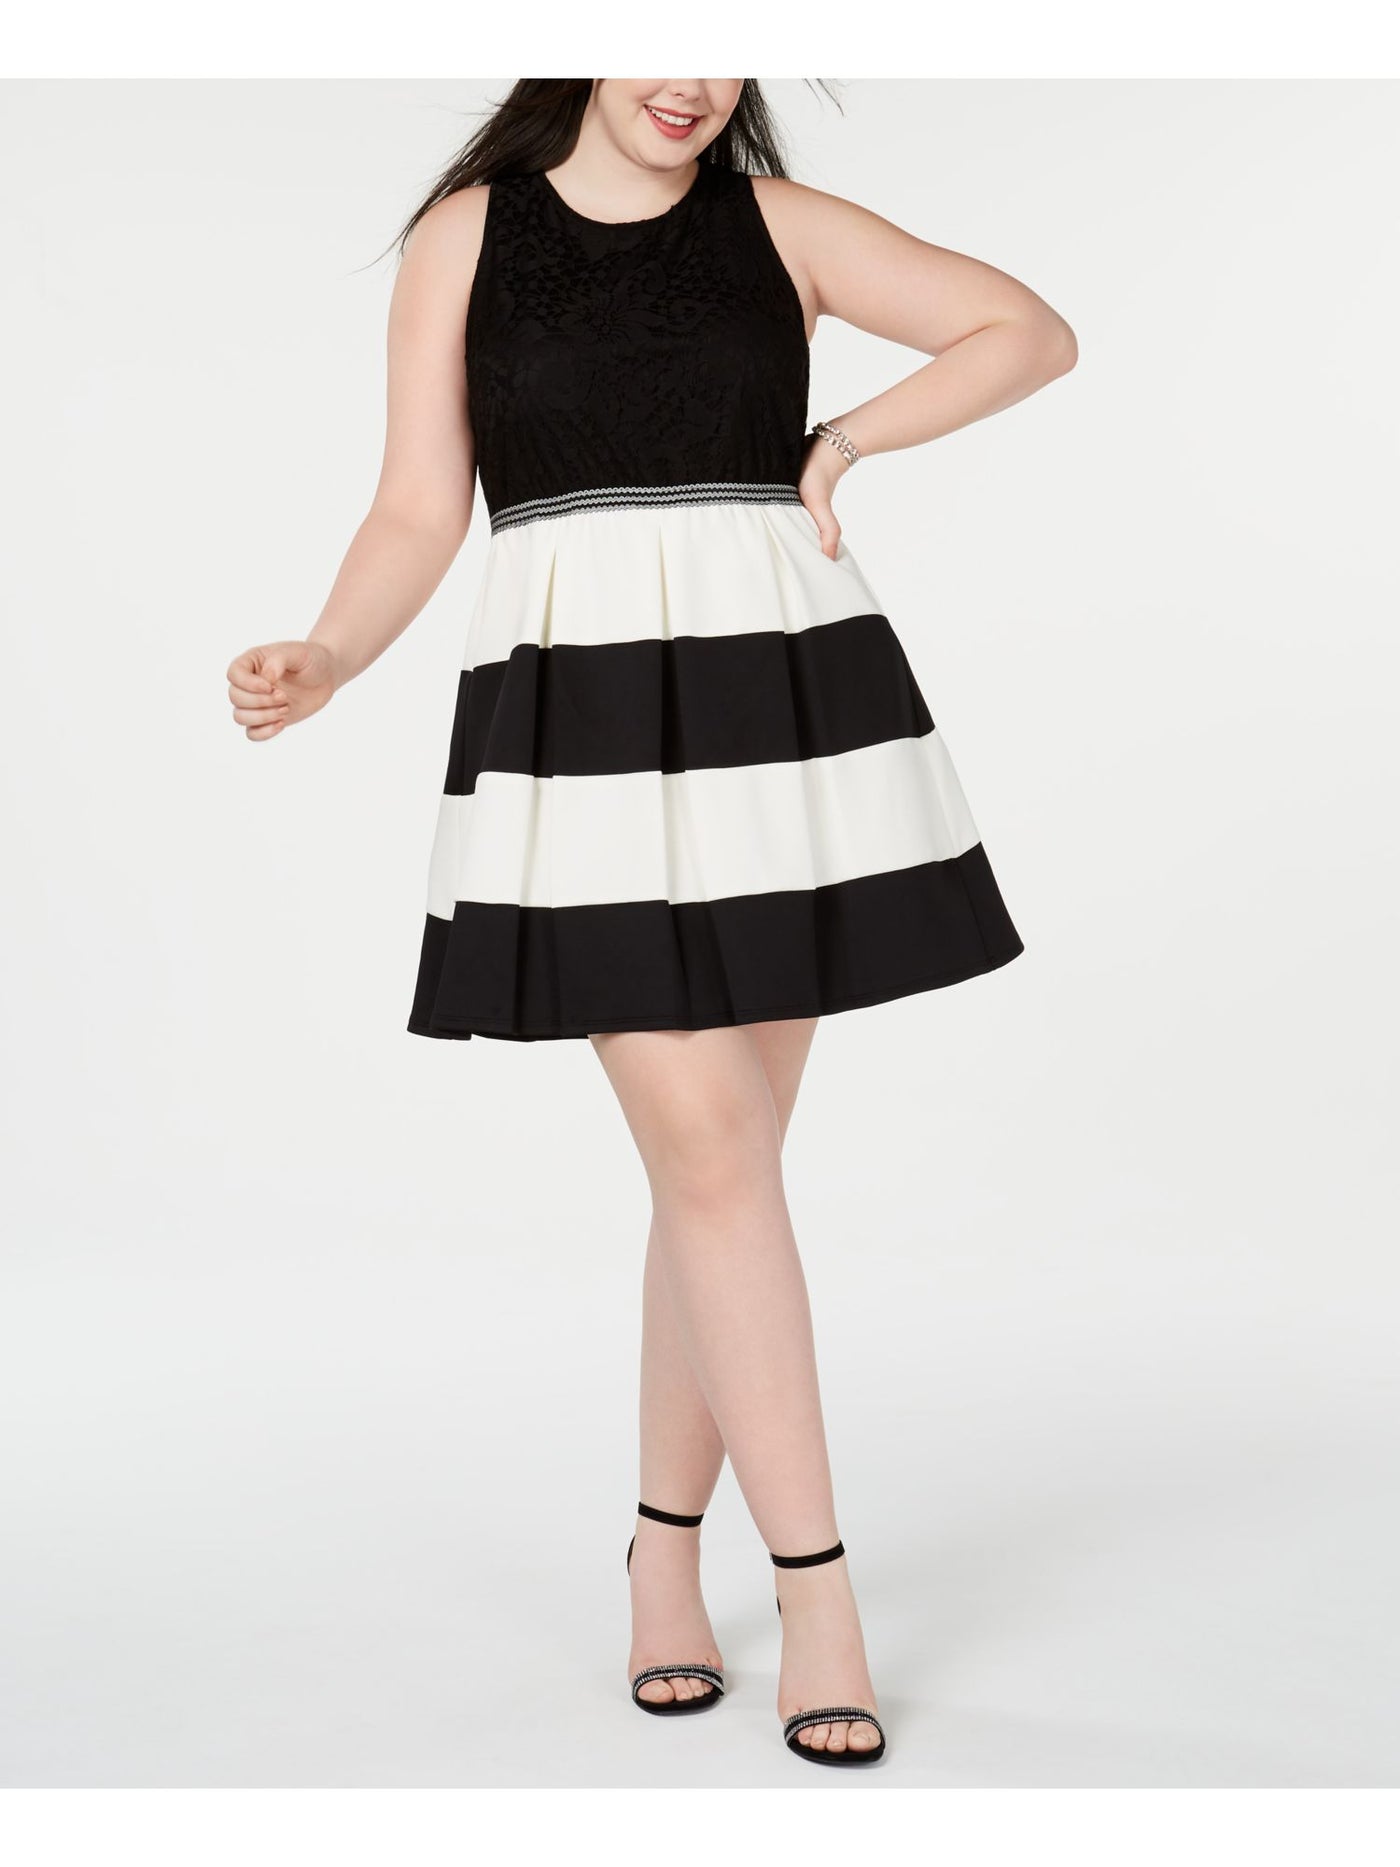 SPEECHLESS Womens Black Striped Sleeveless Jewel Neck Above The Knee Fit + Flare Dress Juniors 18